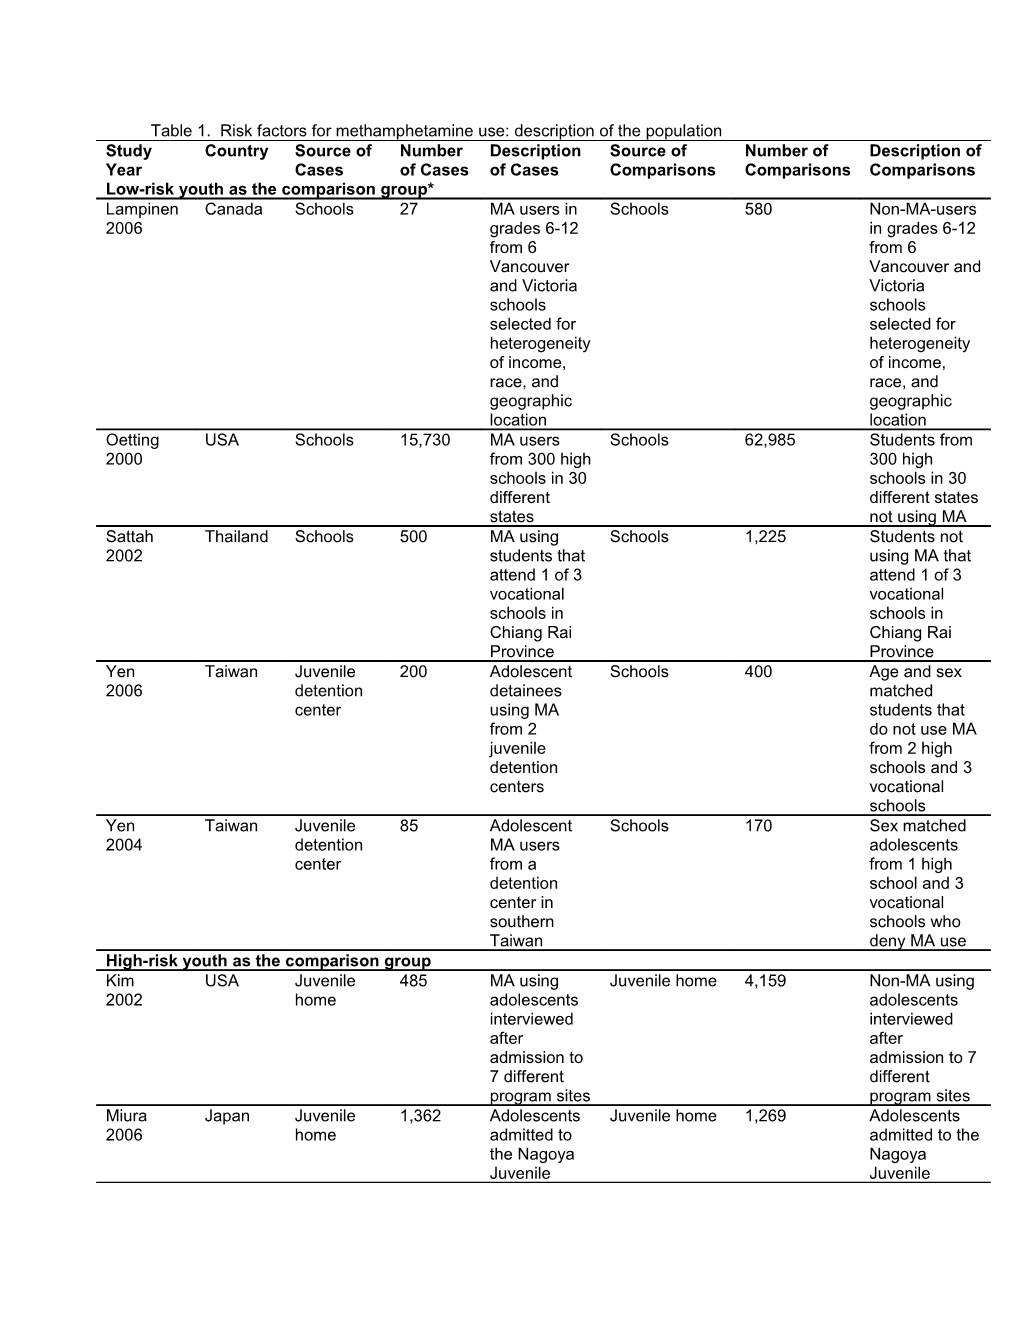 Table 1. Risk Factors for Methamphetamine Use: Description of the Population